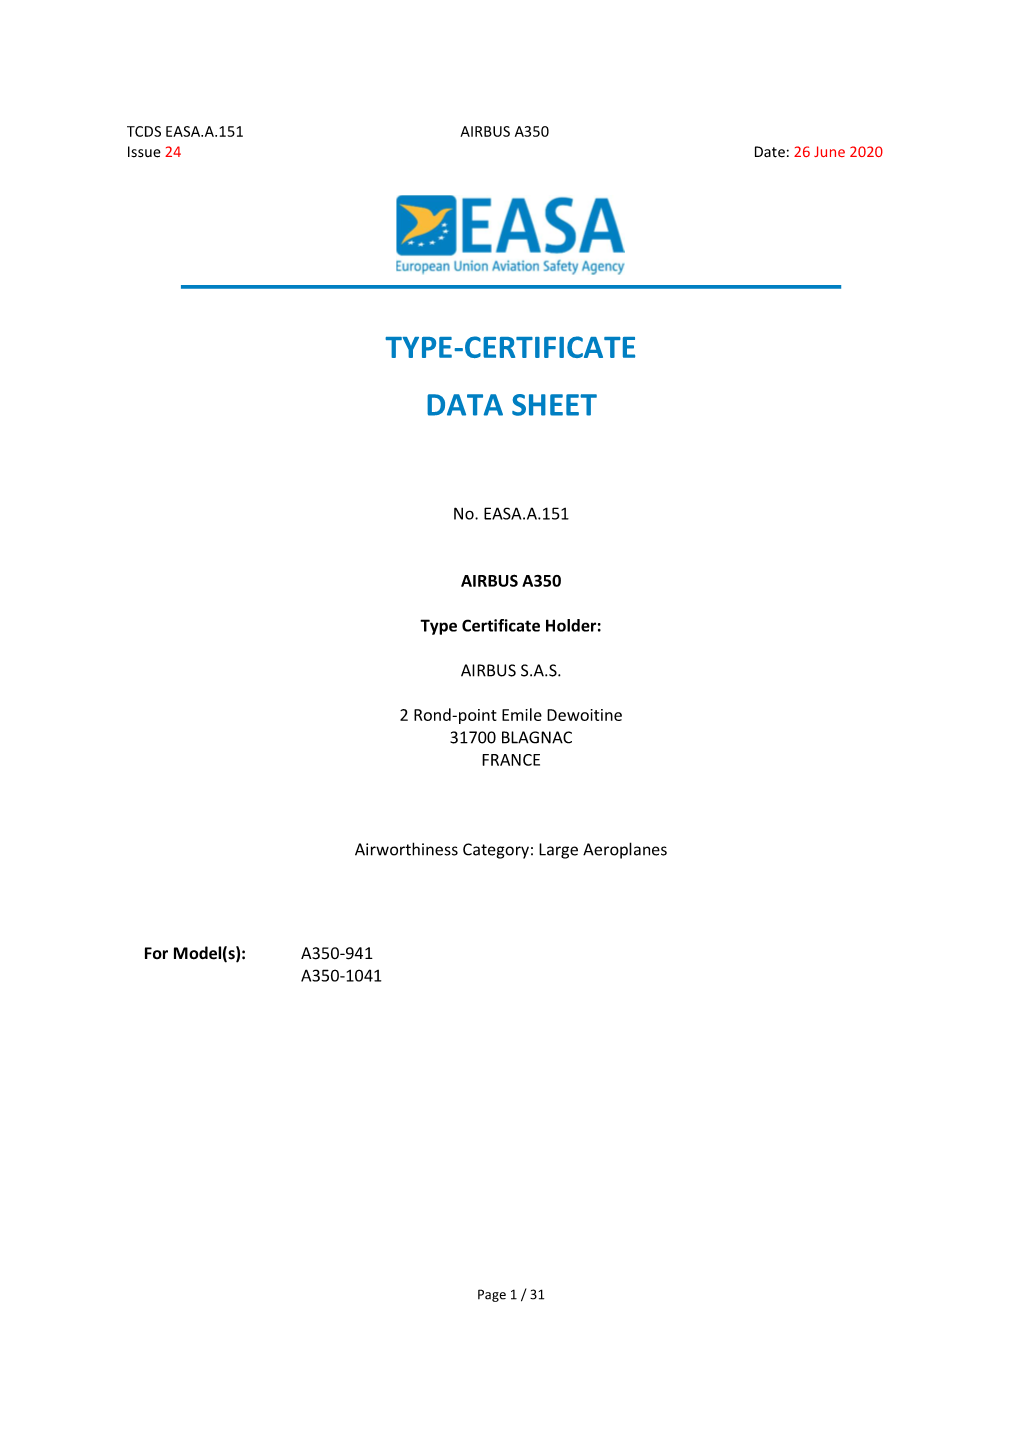 Type-Certificate Data Sheet